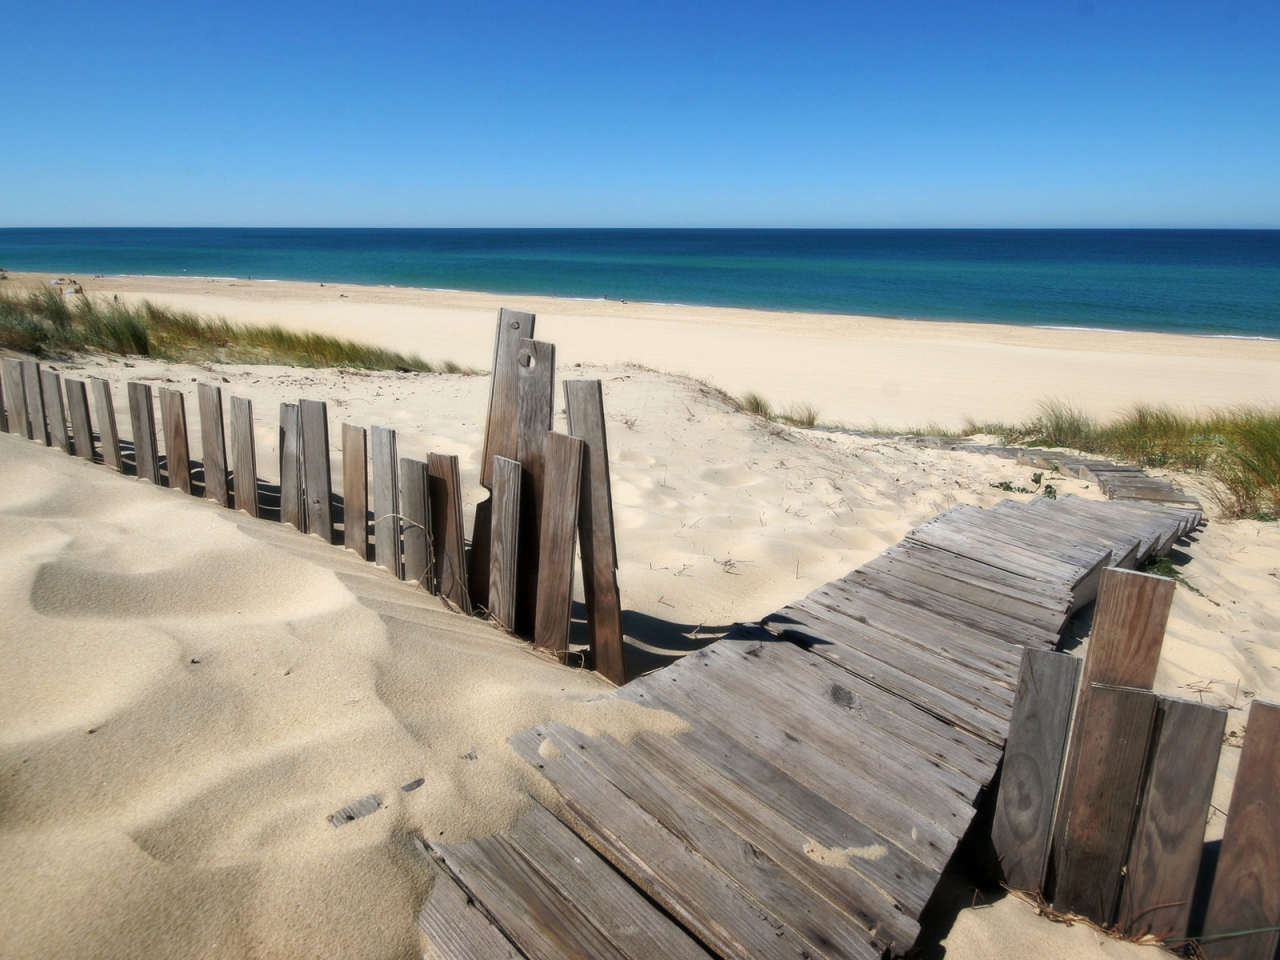 Deserted Beach for 1280 x 960 resolution